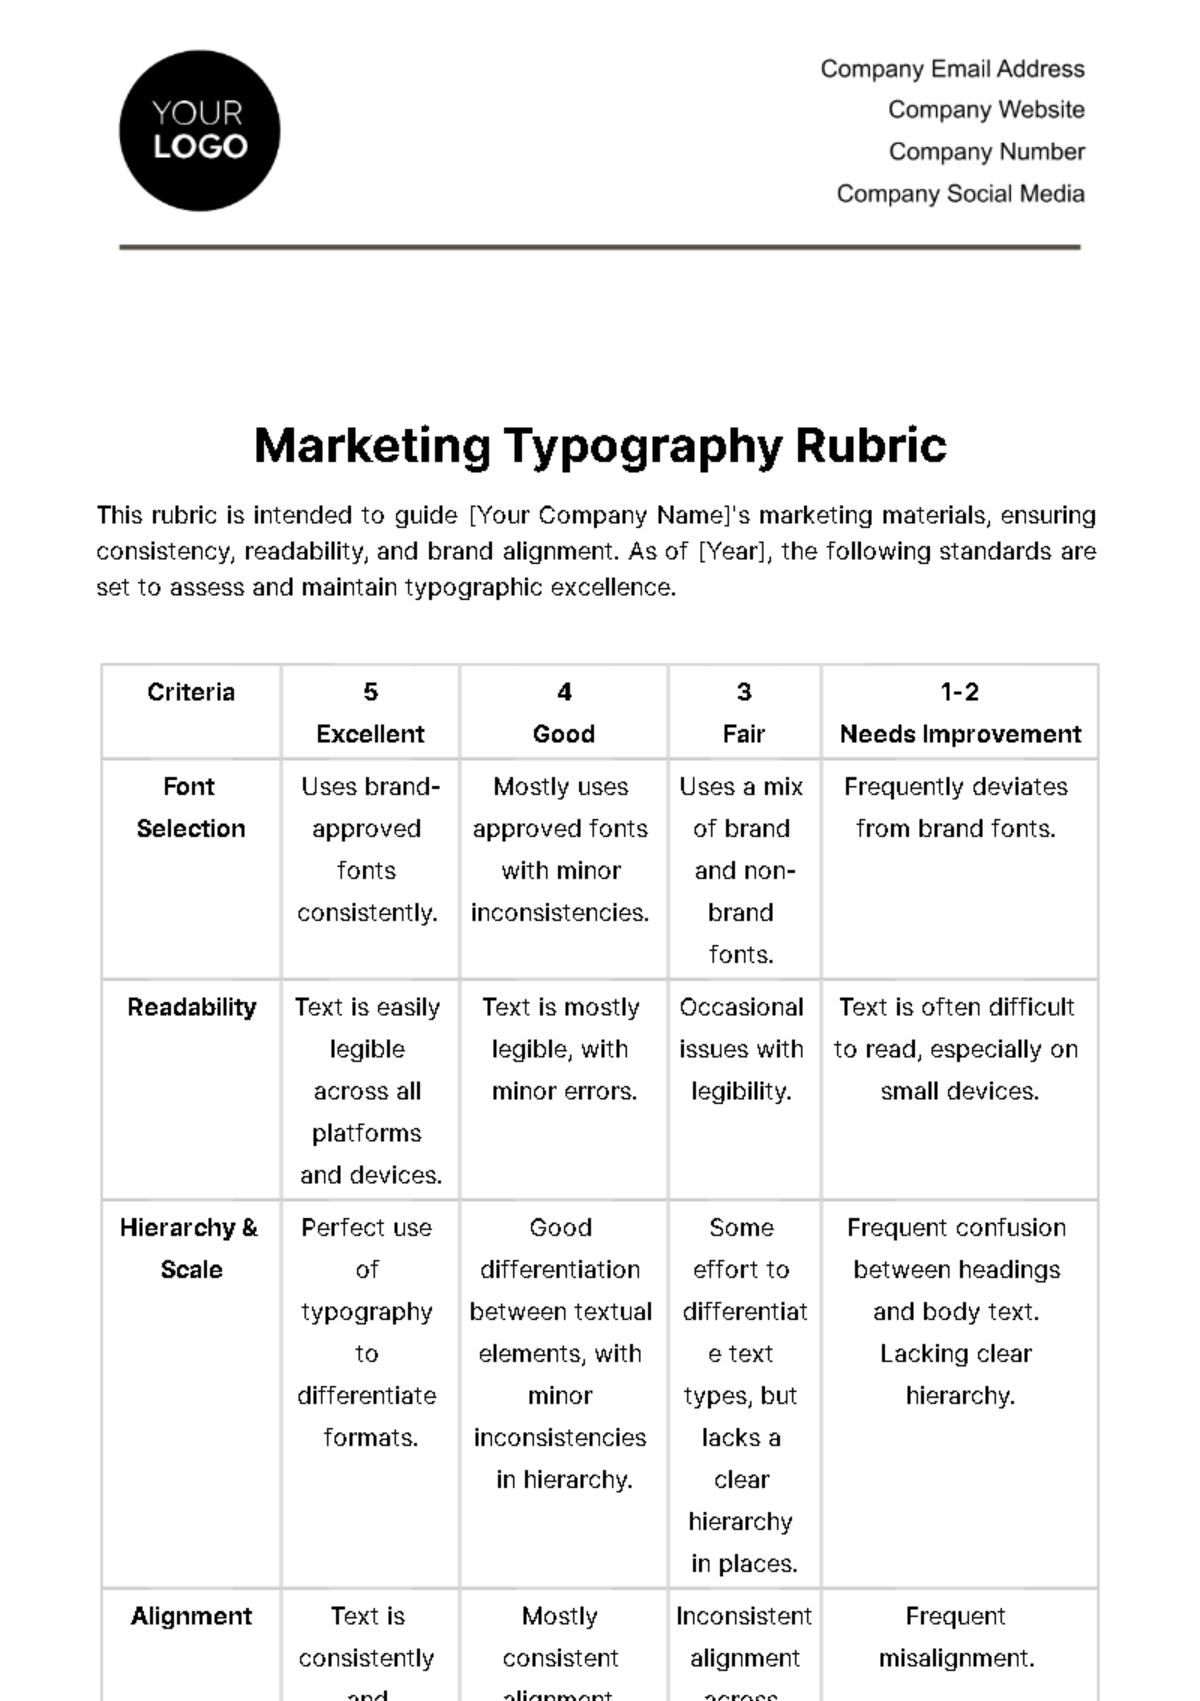 Marketing Typography Rubric Template